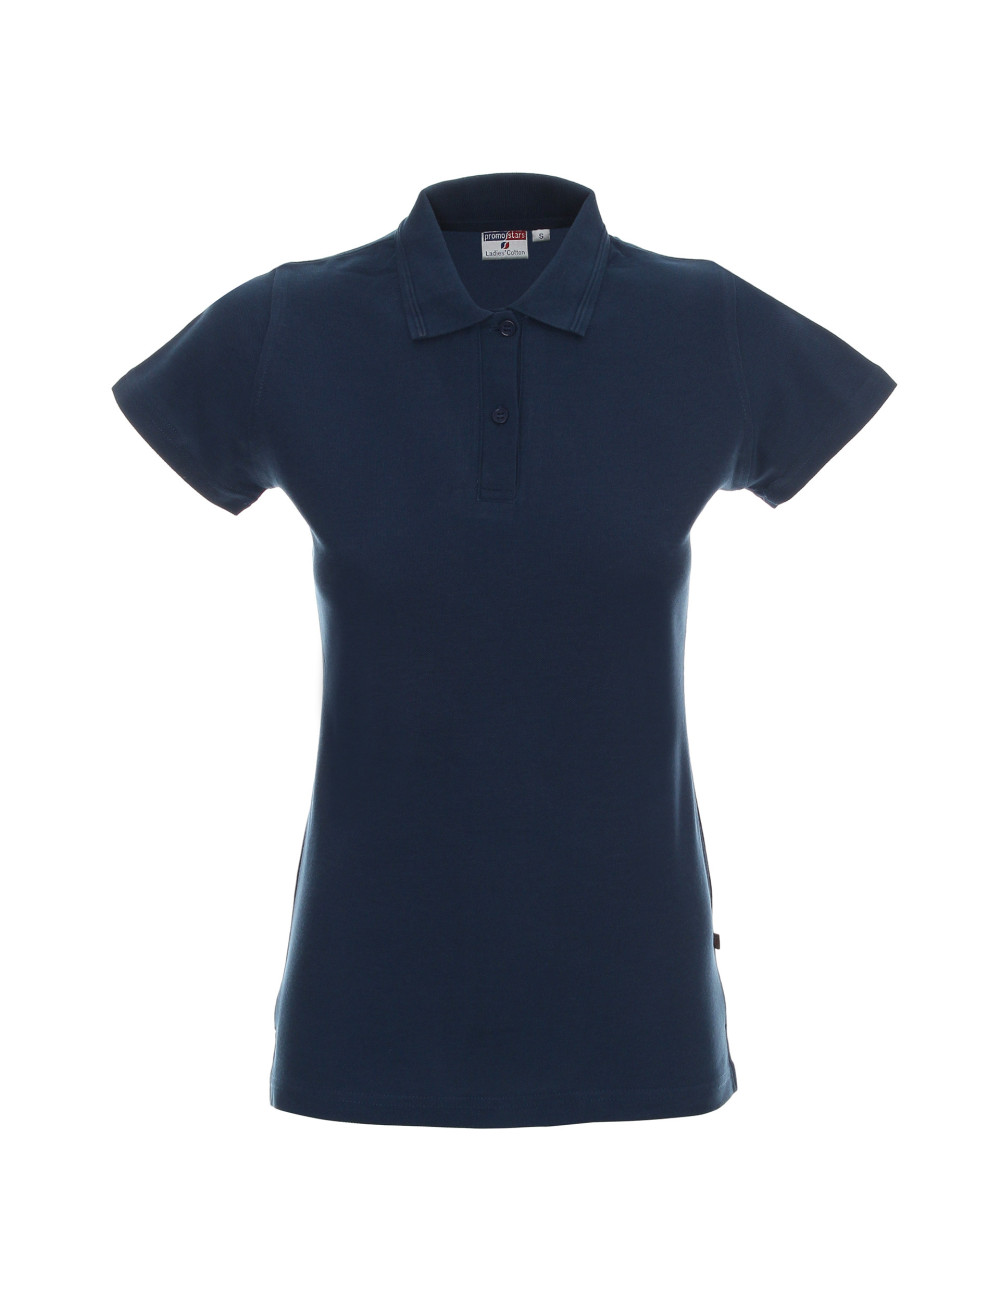 Damen-Poloshirt aus Baumwolle, dunkelblau, Promostars